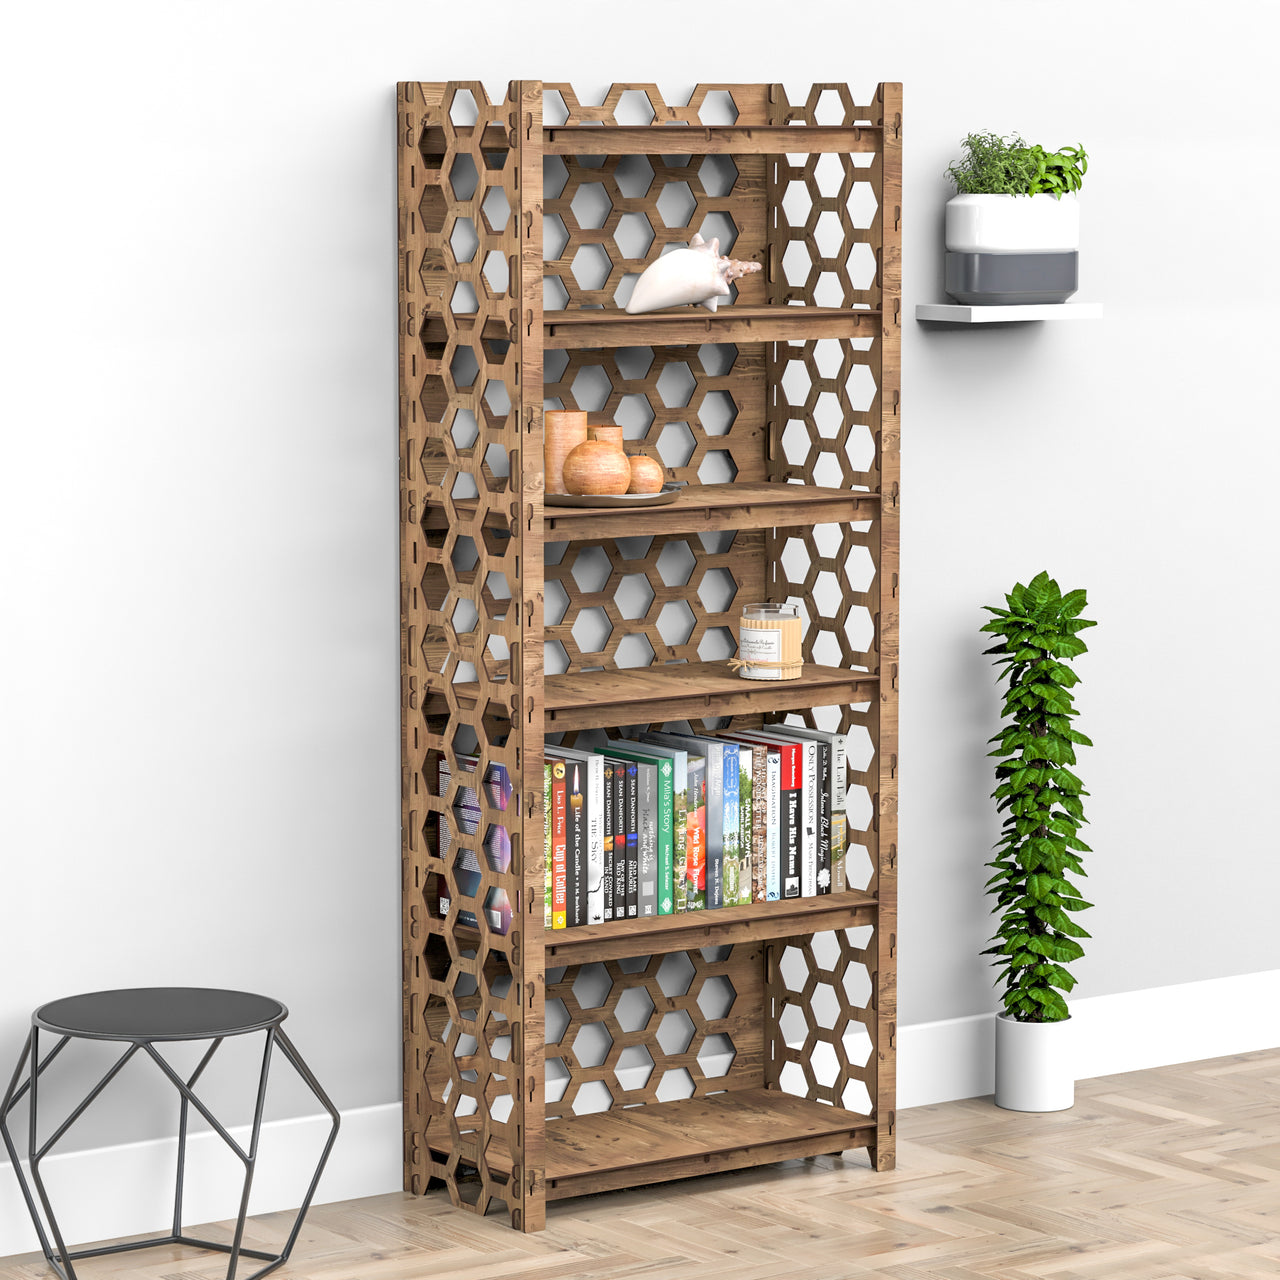 Honeycomb LUX 6-tier Bookshelf Bookcase Shelving Unit